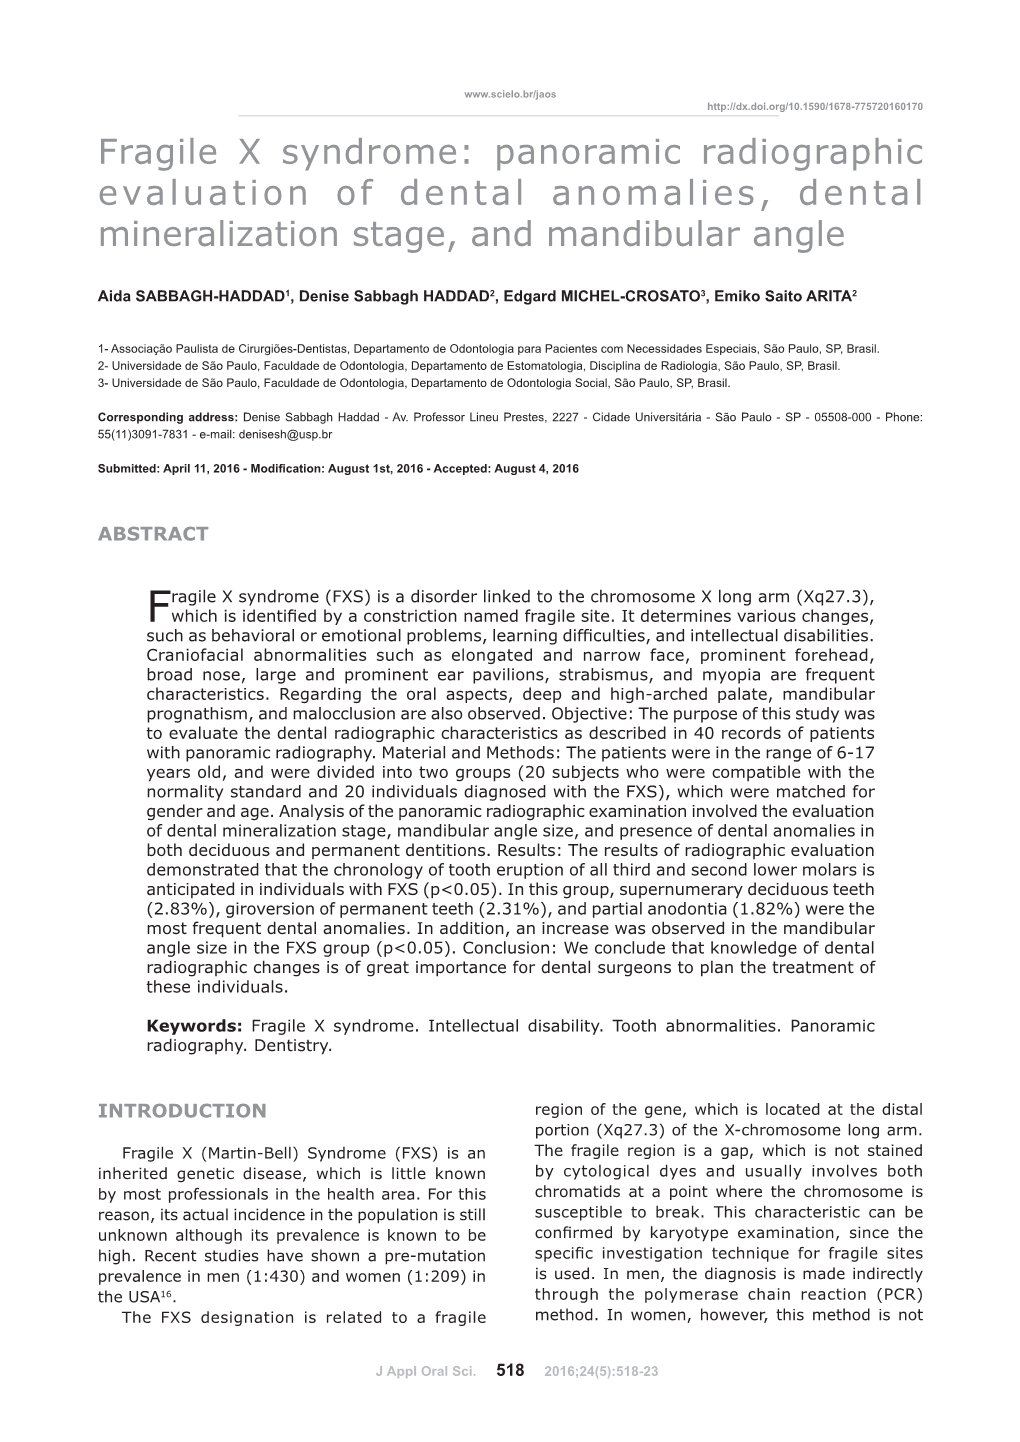 Panoramic Radiographic Evaluation of Dental Anomalies, Dental Mineralization Stage, and Mandibular Angle